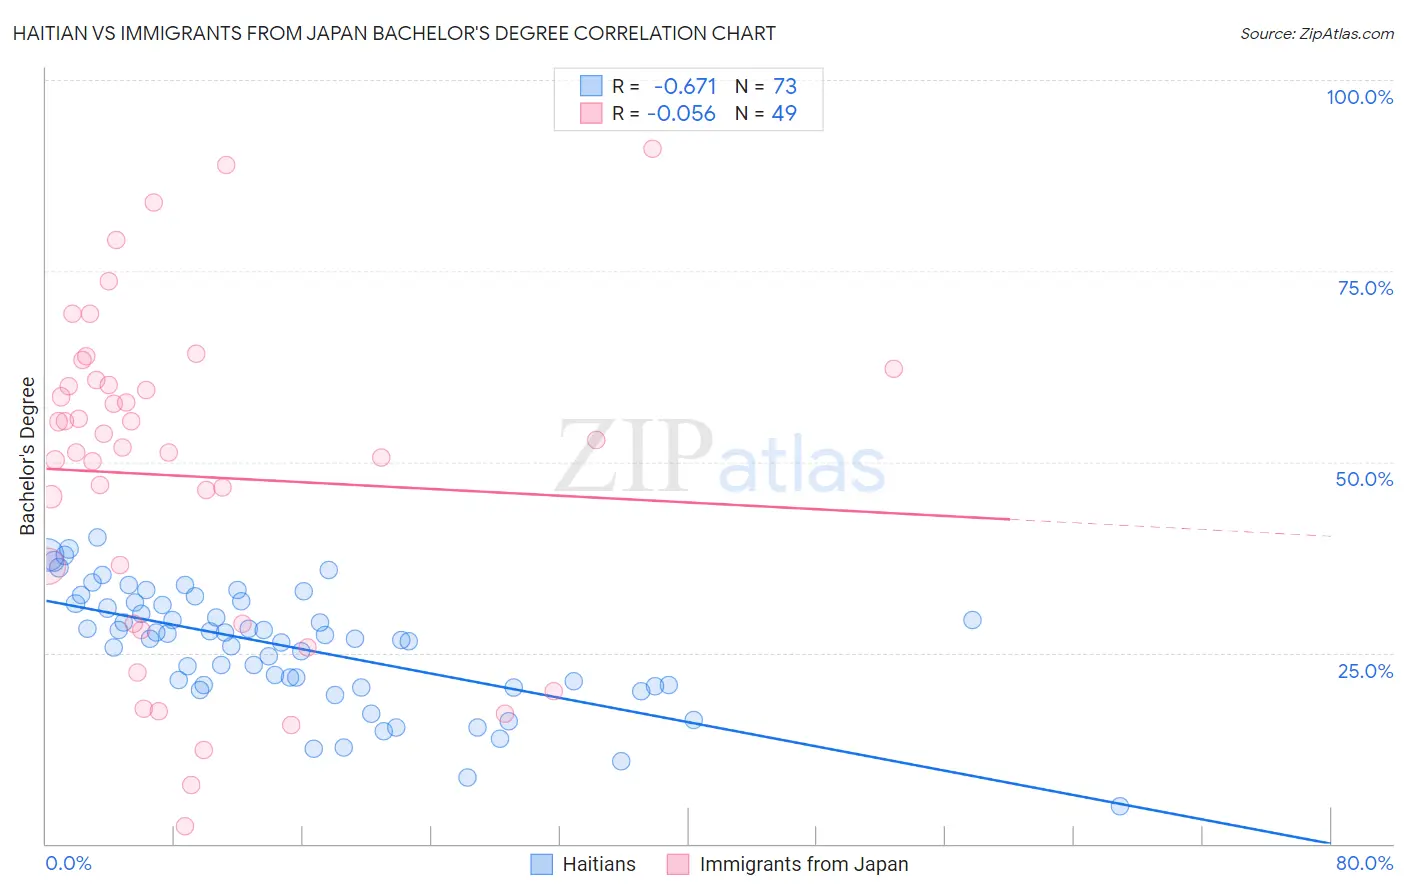 Haitian vs Immigrants from Japan Bachelor's Degree